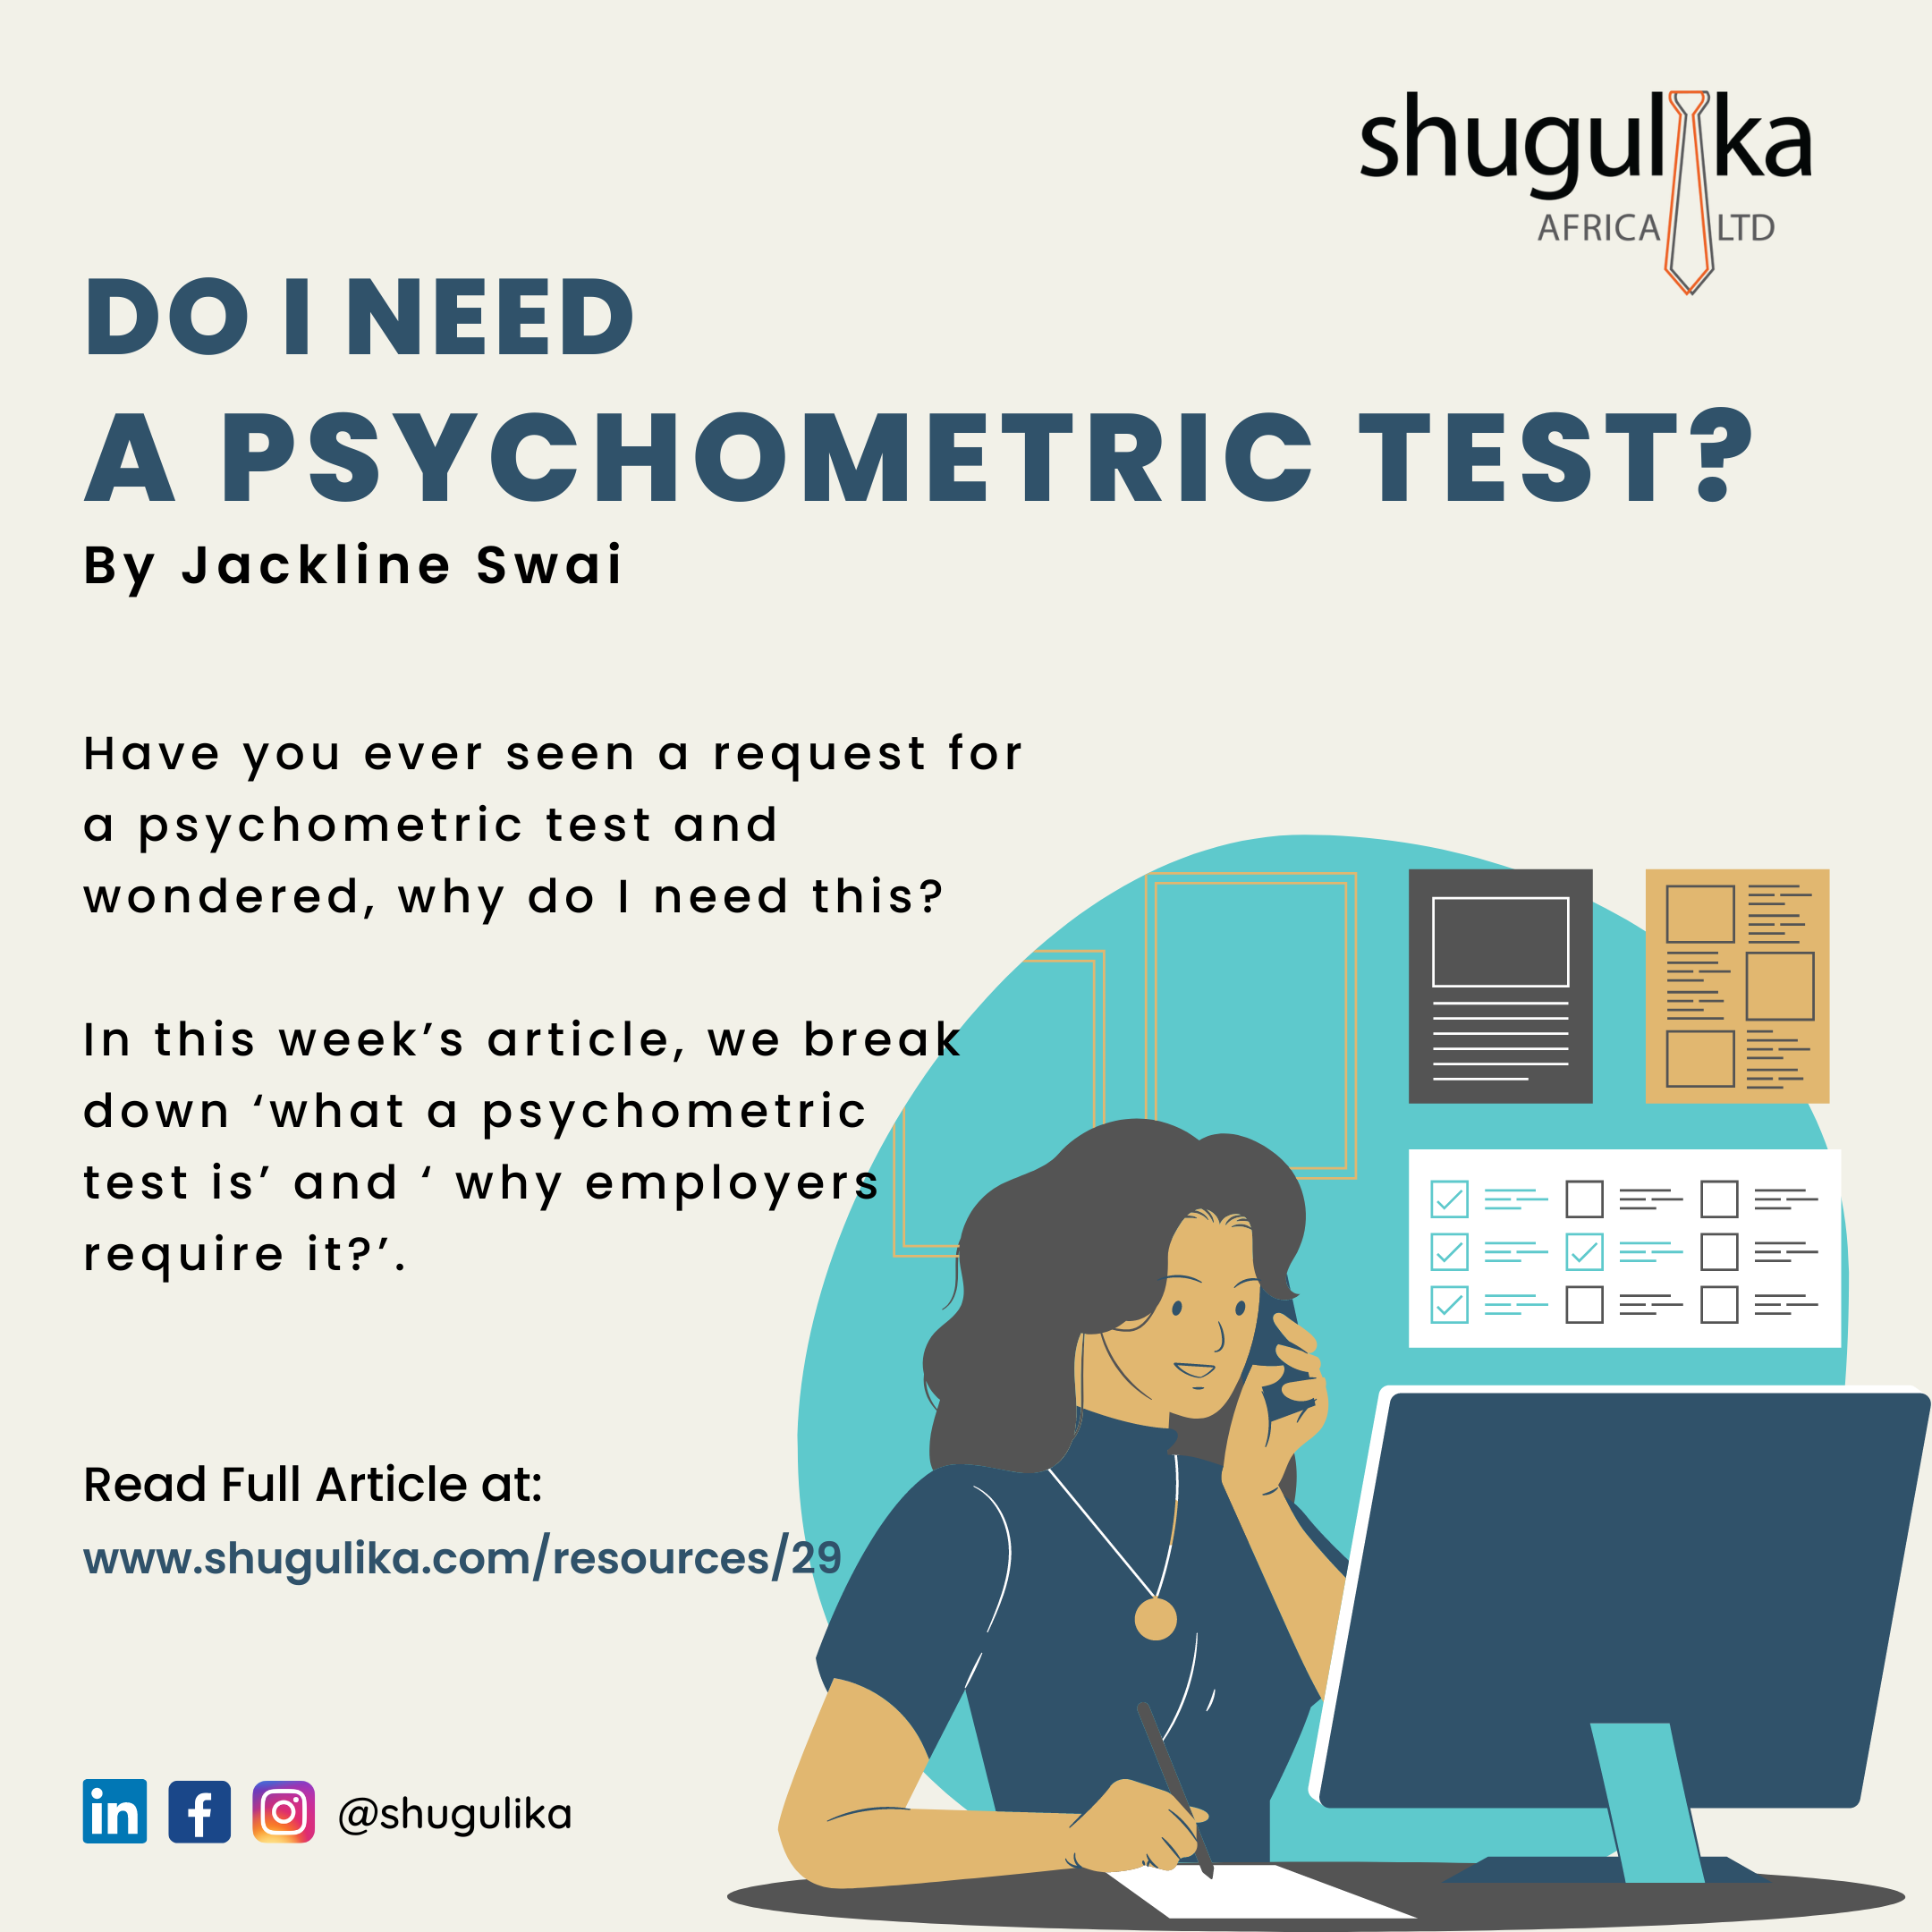 DO I NEED A PSYCHOMETRIC TEST